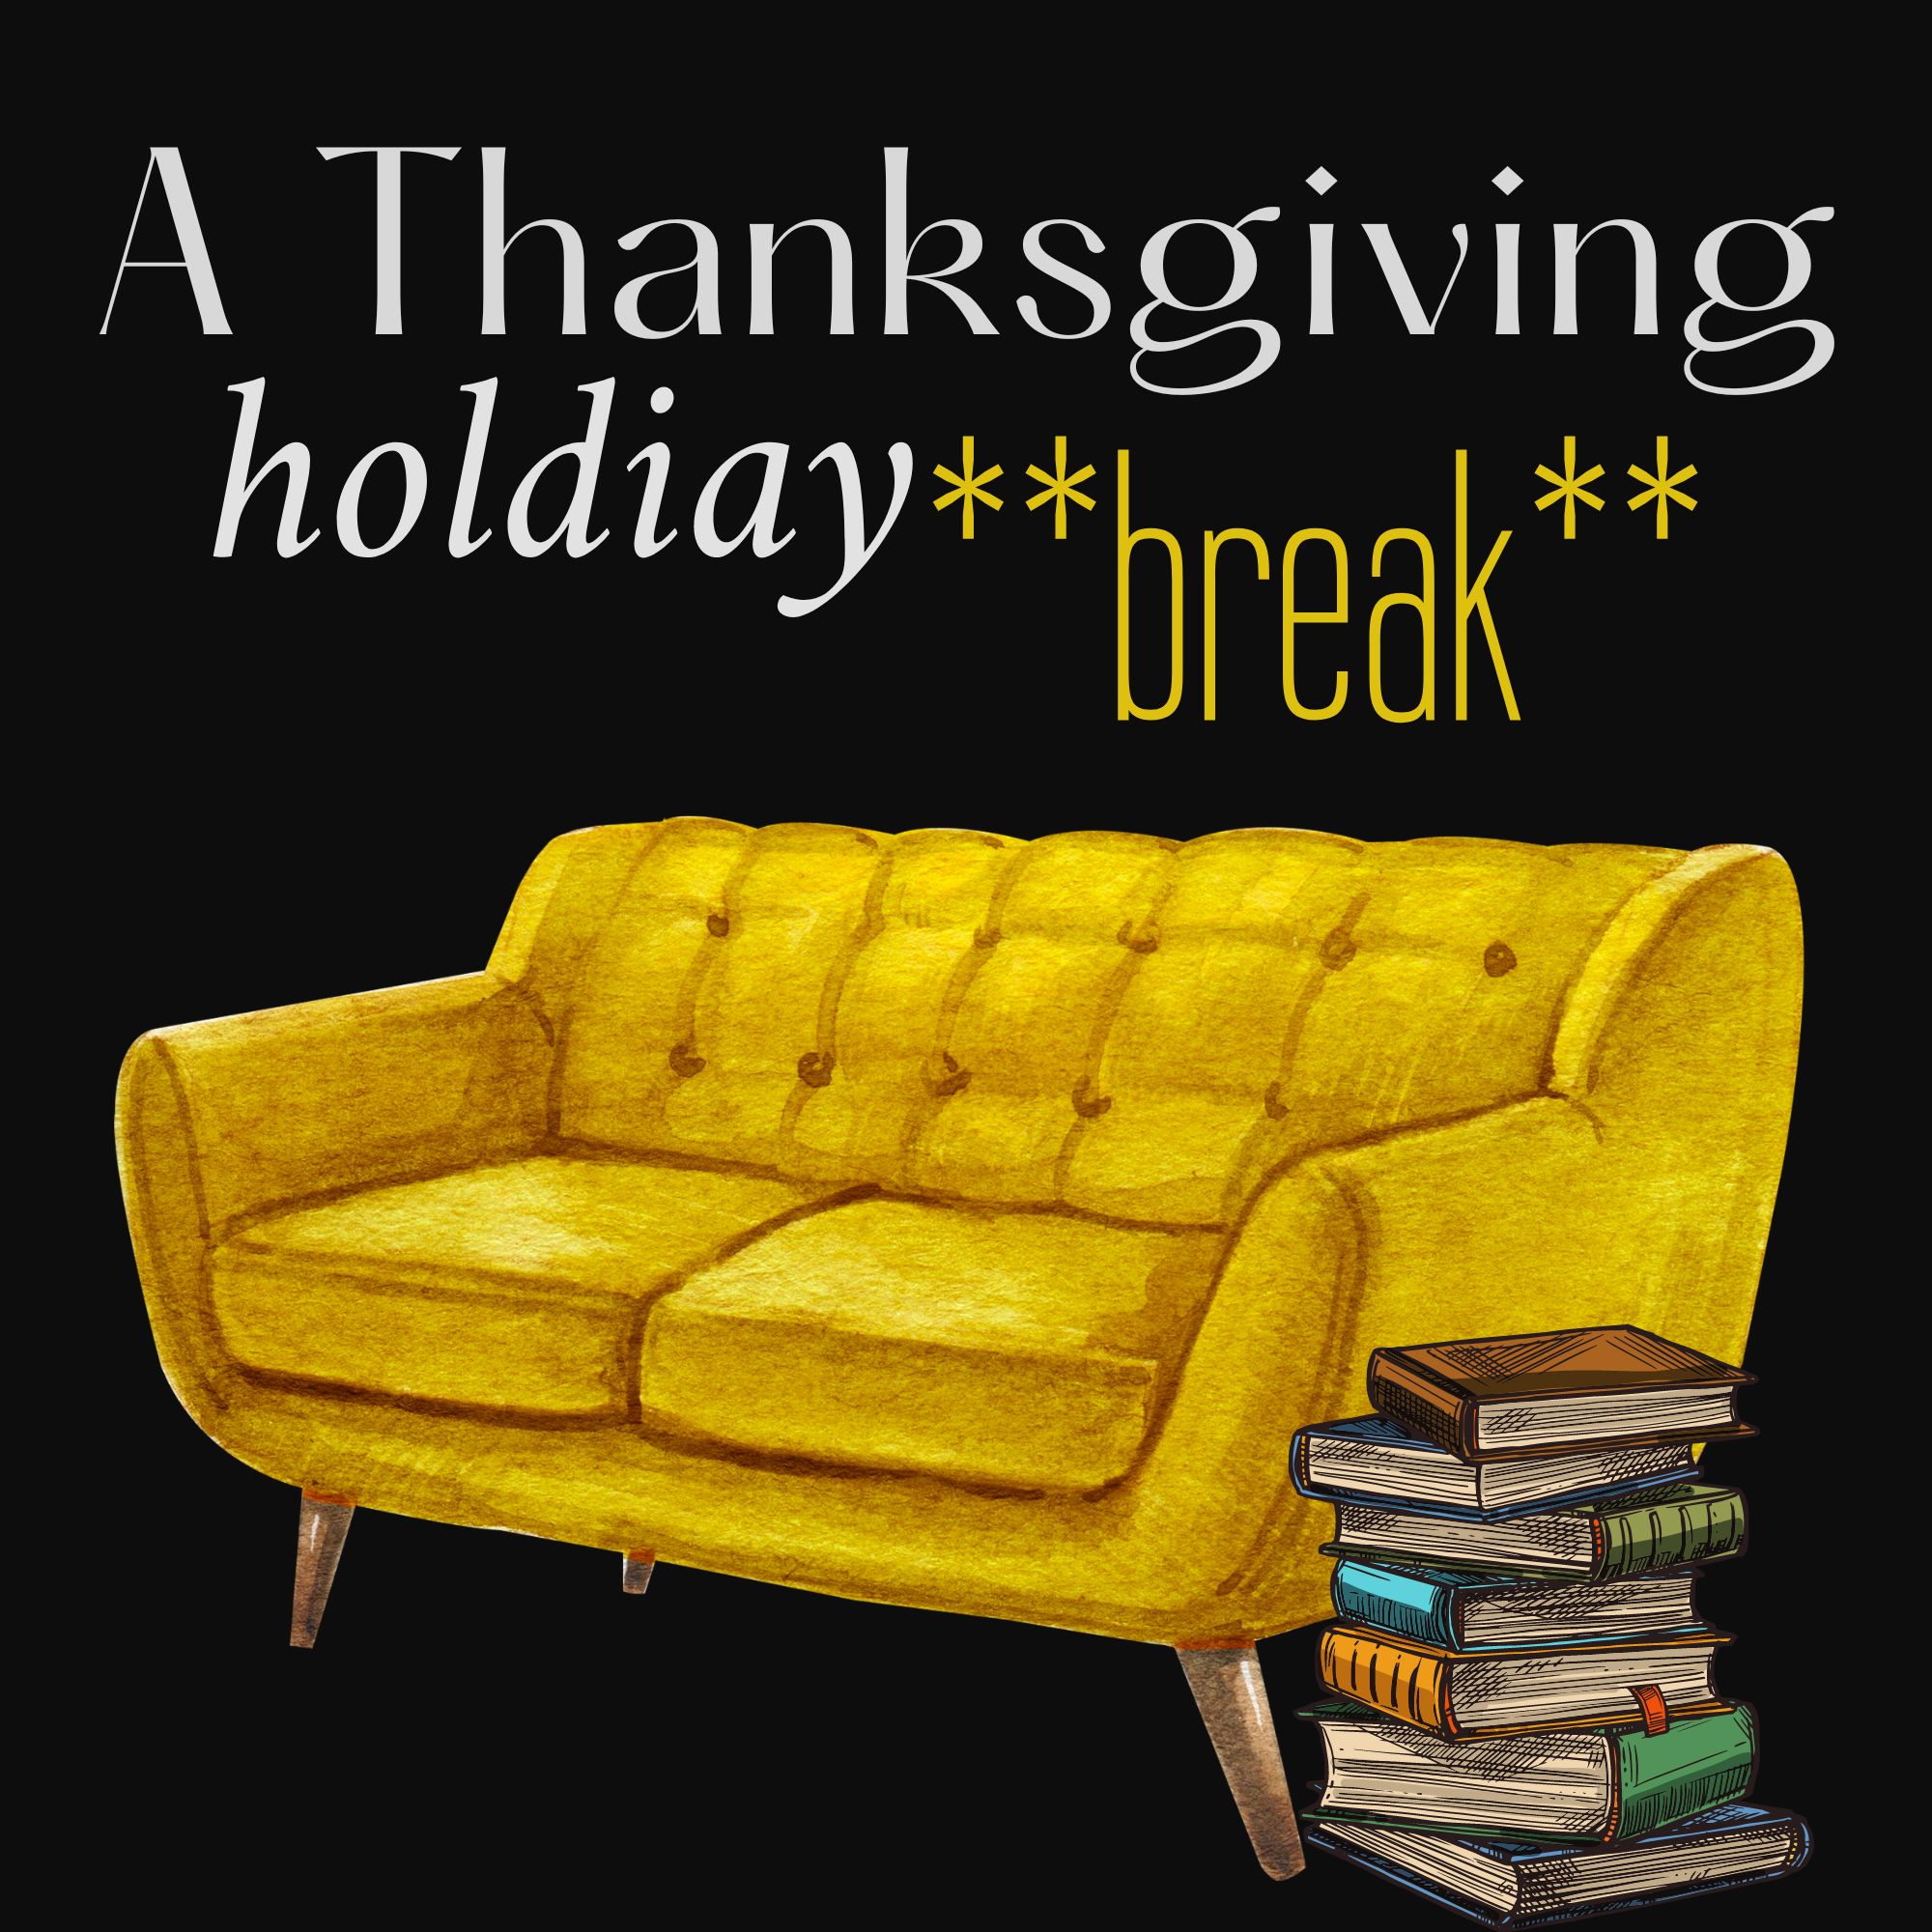 A Thanksgiving Holiday **BREAK**